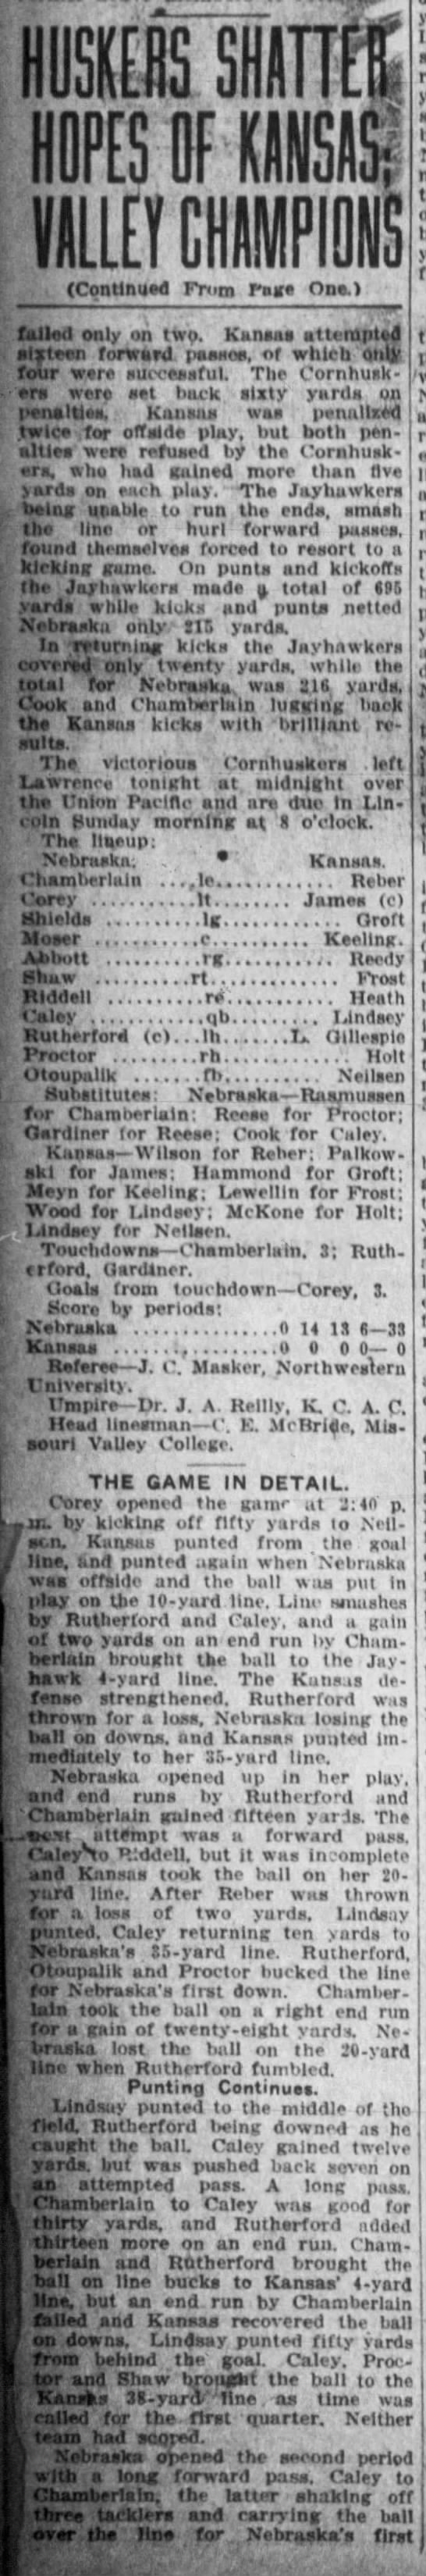 1915 Nebraska-Kansas part 2 - 